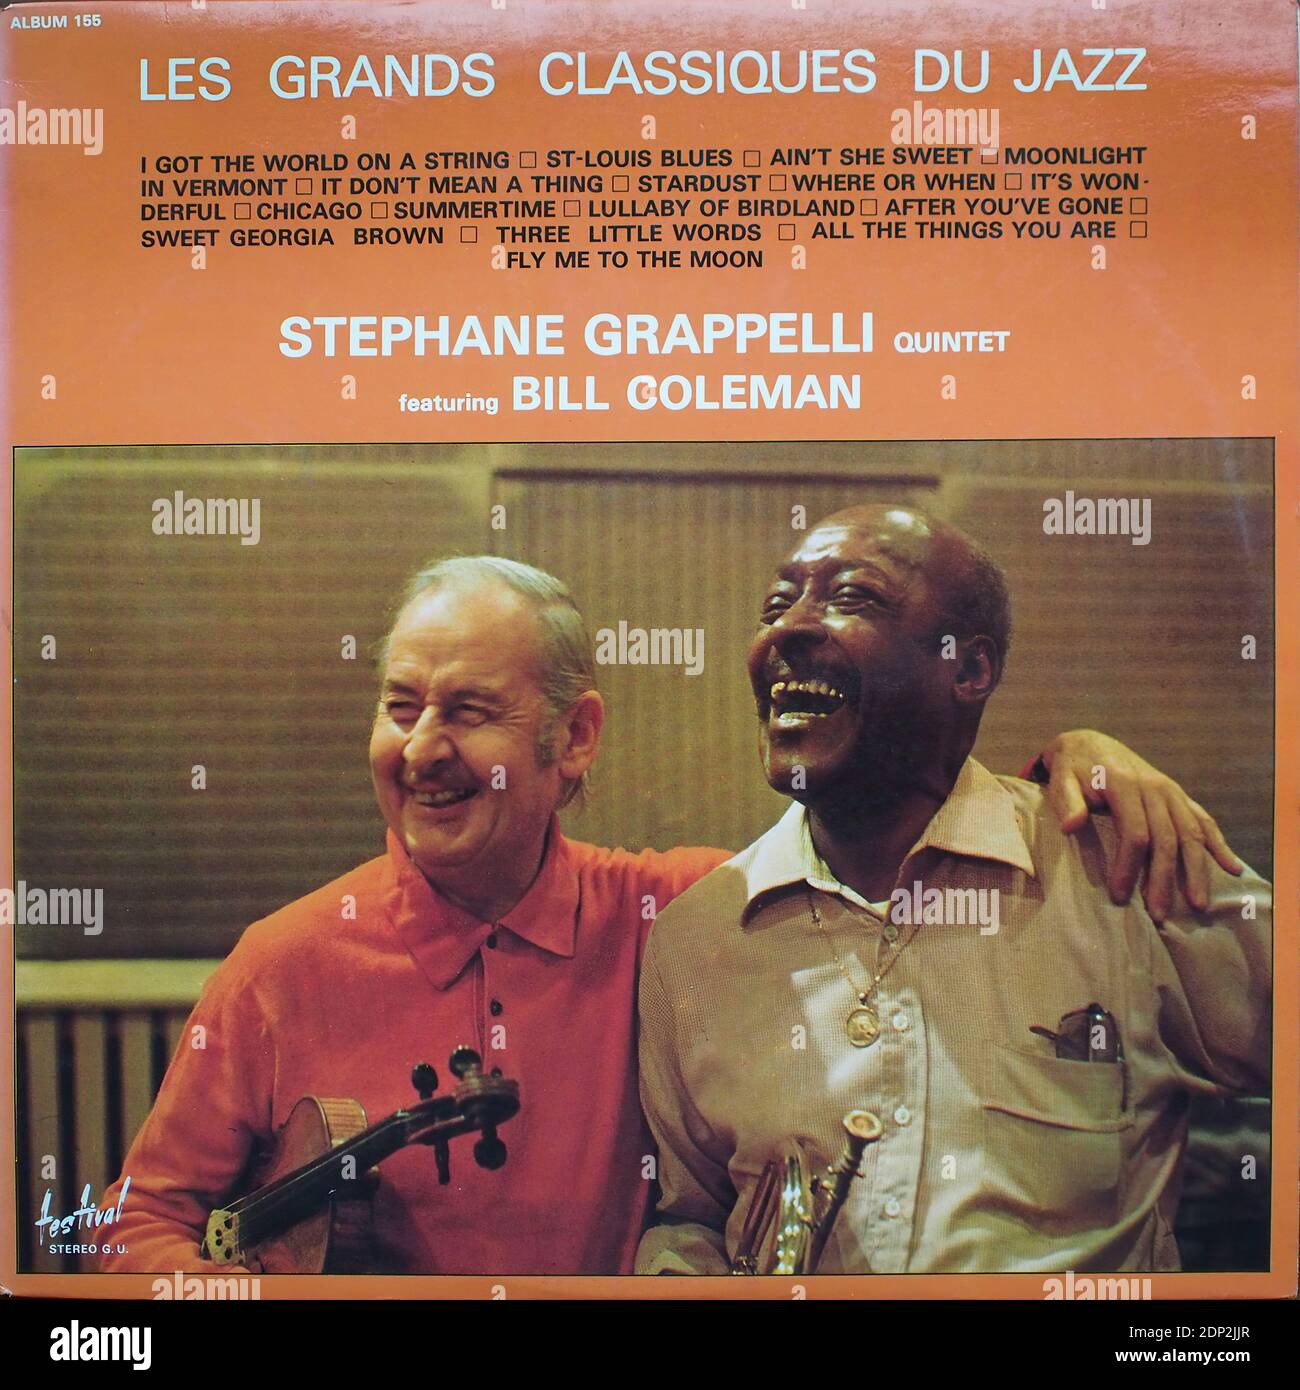 Stephane Grappelli Quintet ft. Bill Coleman, Festival Album Musidisc 155 -  Vintage vinyl album cover Stock Photo - Alamy